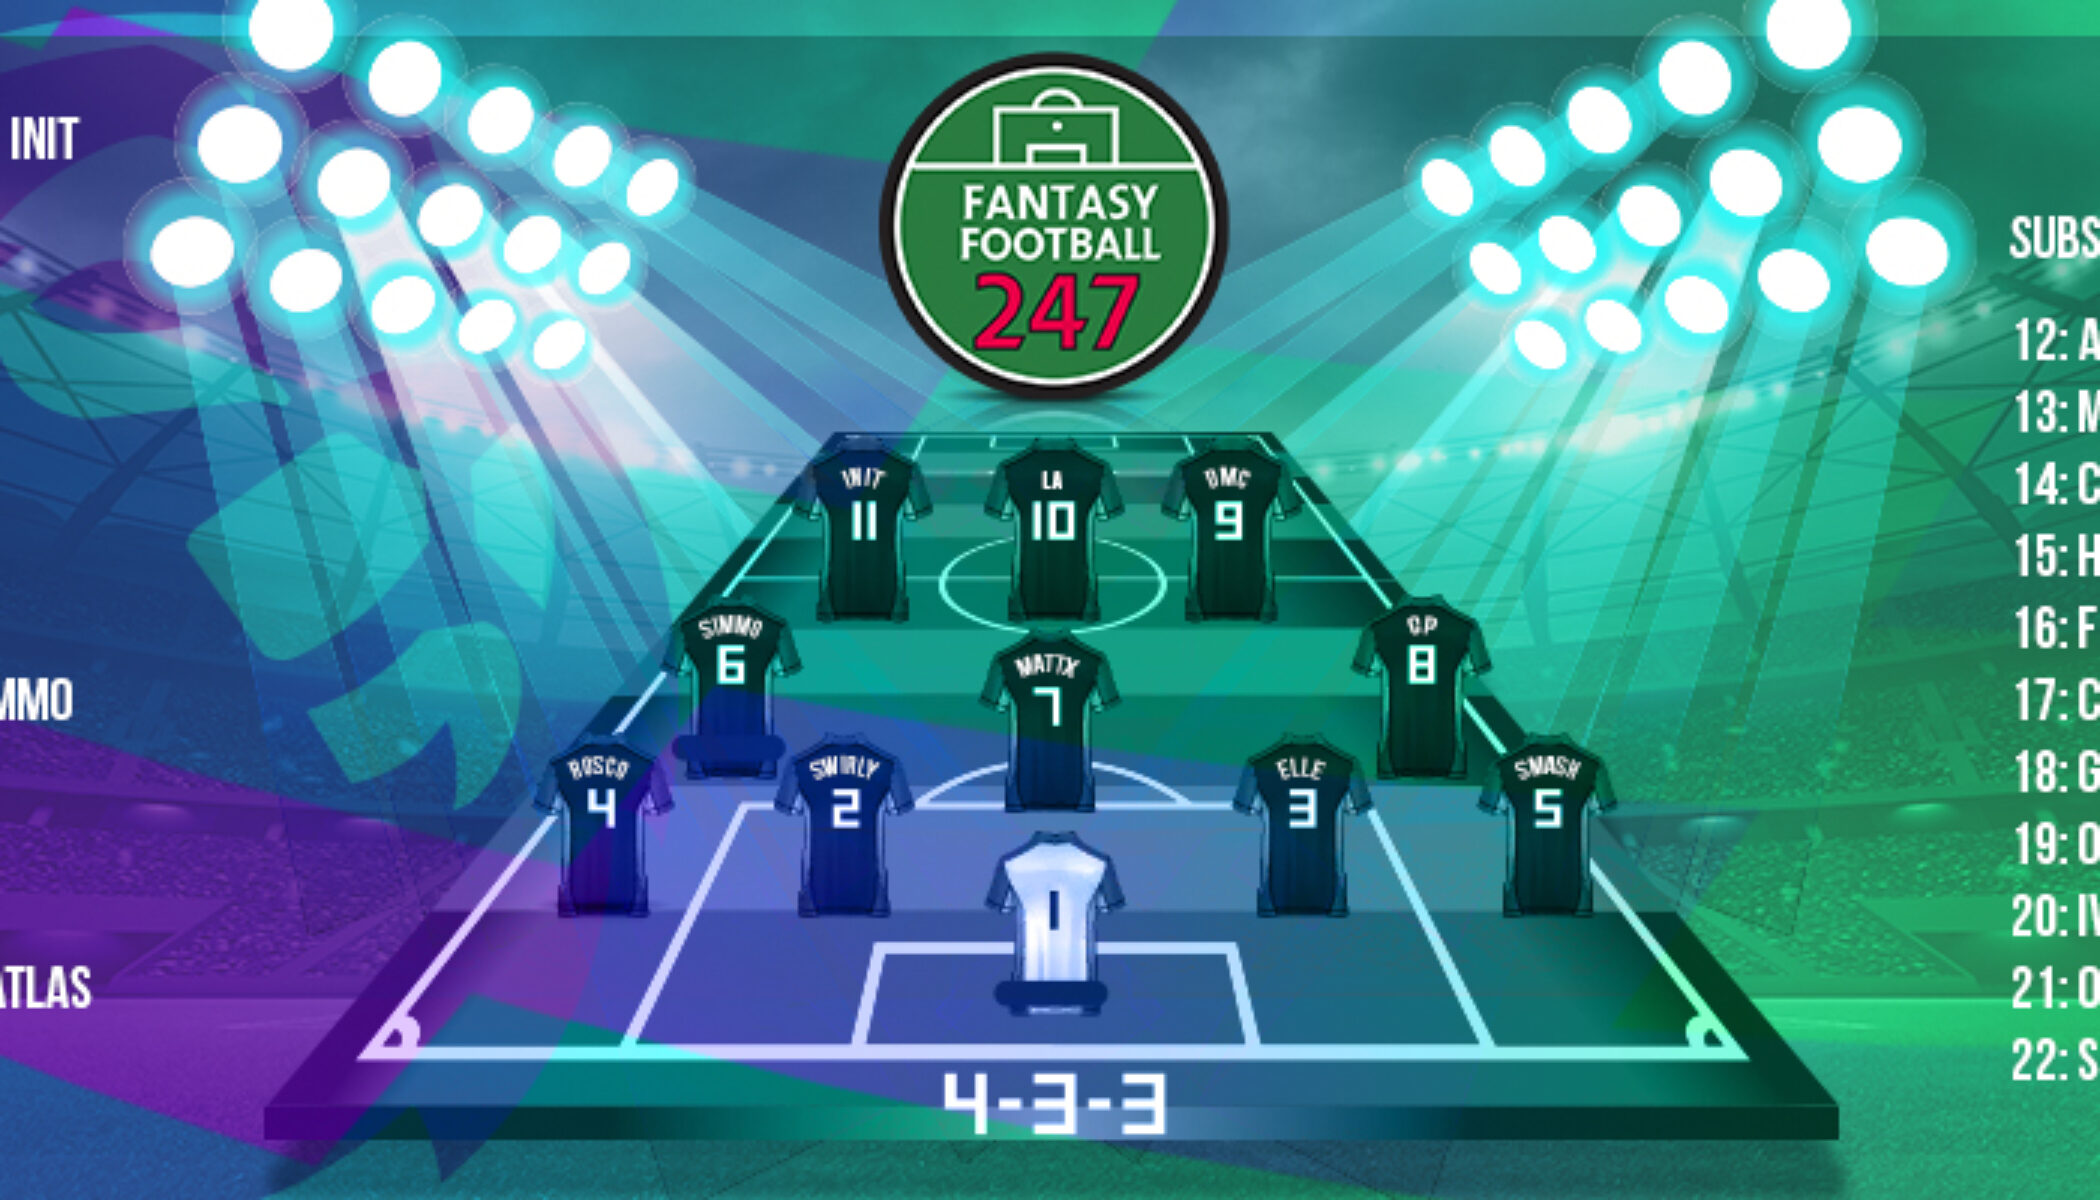 The xFPL leaderboard - through 6 gameweeks. (Source: Fantasy Football Hub)  ______ #premierleague #fantasypremierleague…